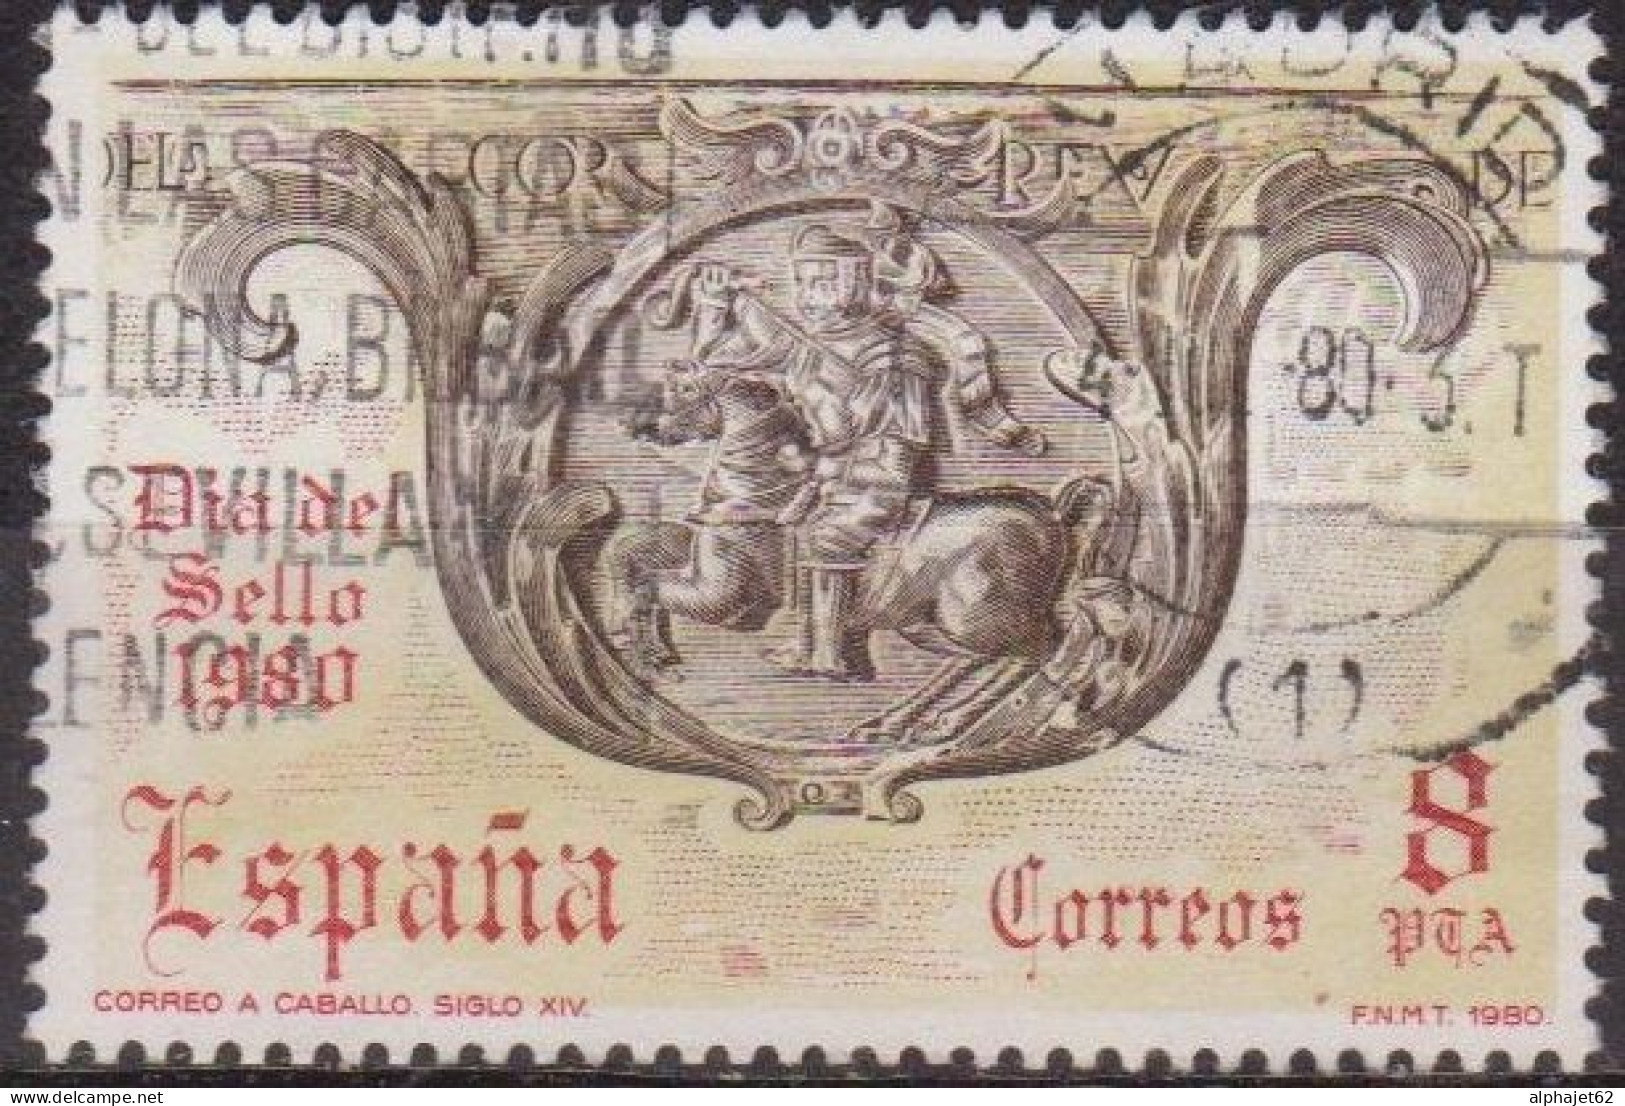 Exposition Philatélique - ESPAGNE - Exfilna-80, Barcelone - N° 2221 - 1980 - Used Stamps